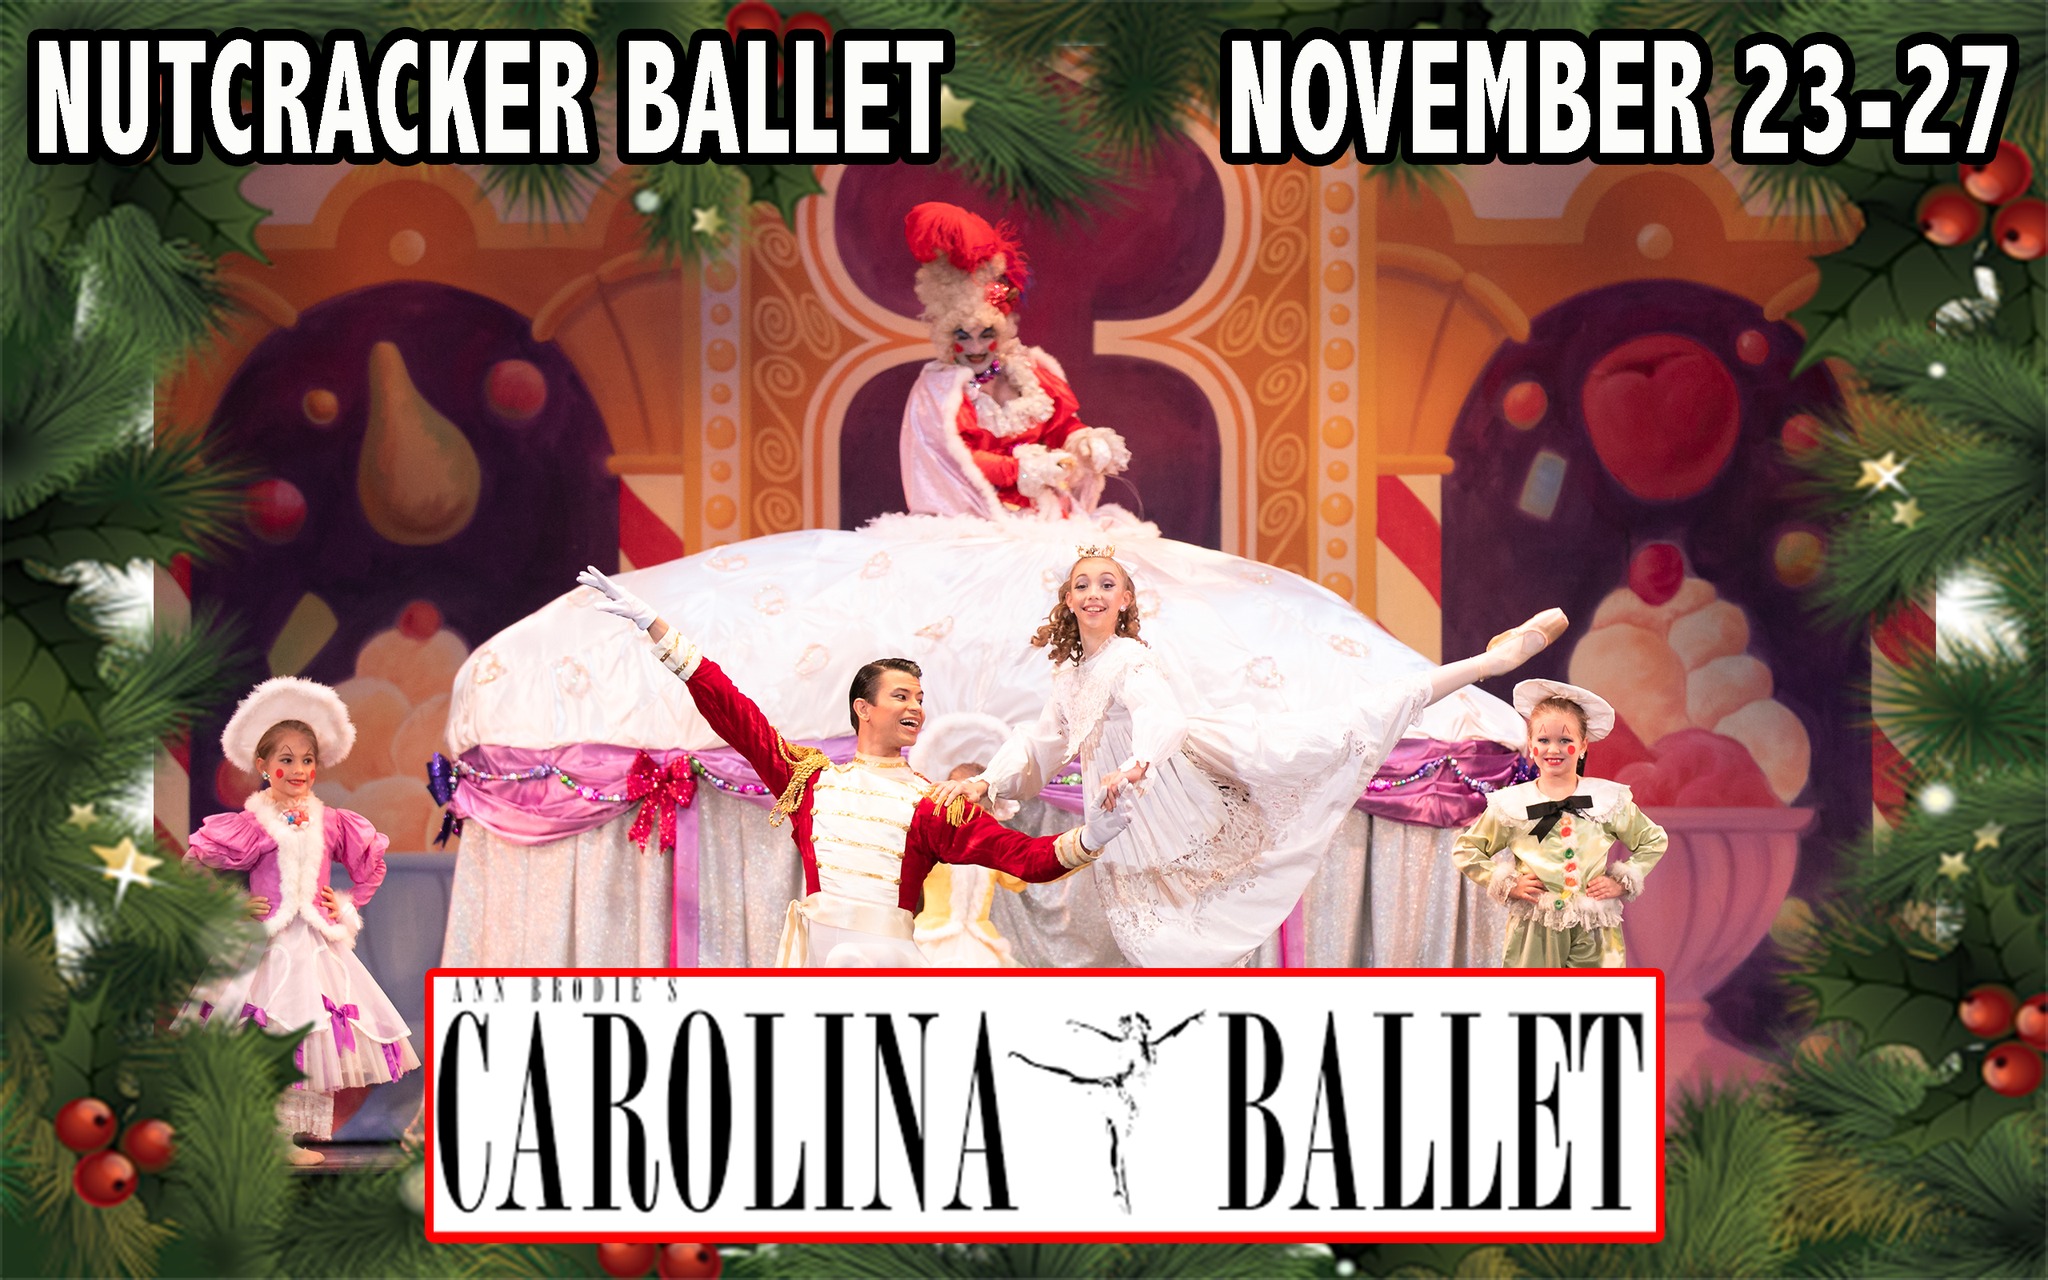 Ann Brodie's Carolina Ballet: The Nutcracker at Township Auditorium